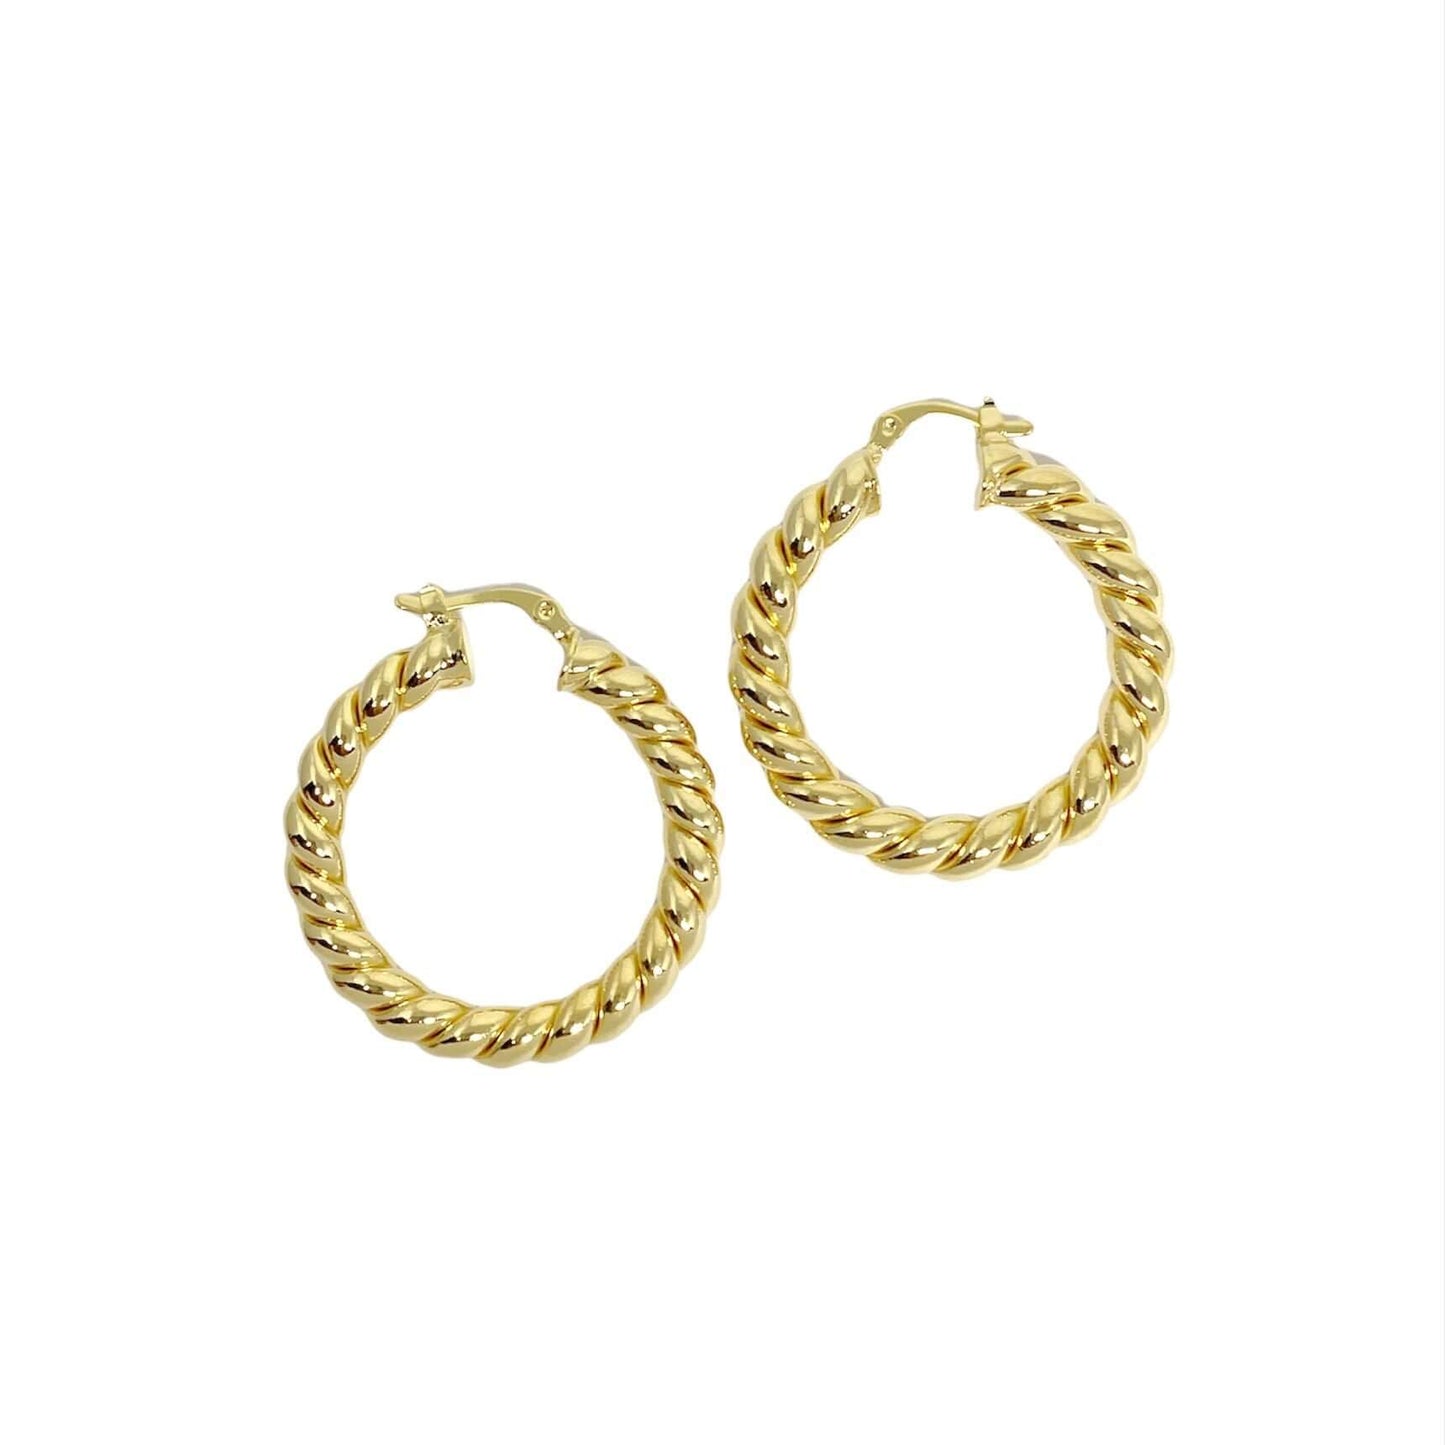 GoldFi 18k Gold Filled Twisted Tube Hoop Earrings - The Croissant Hoops